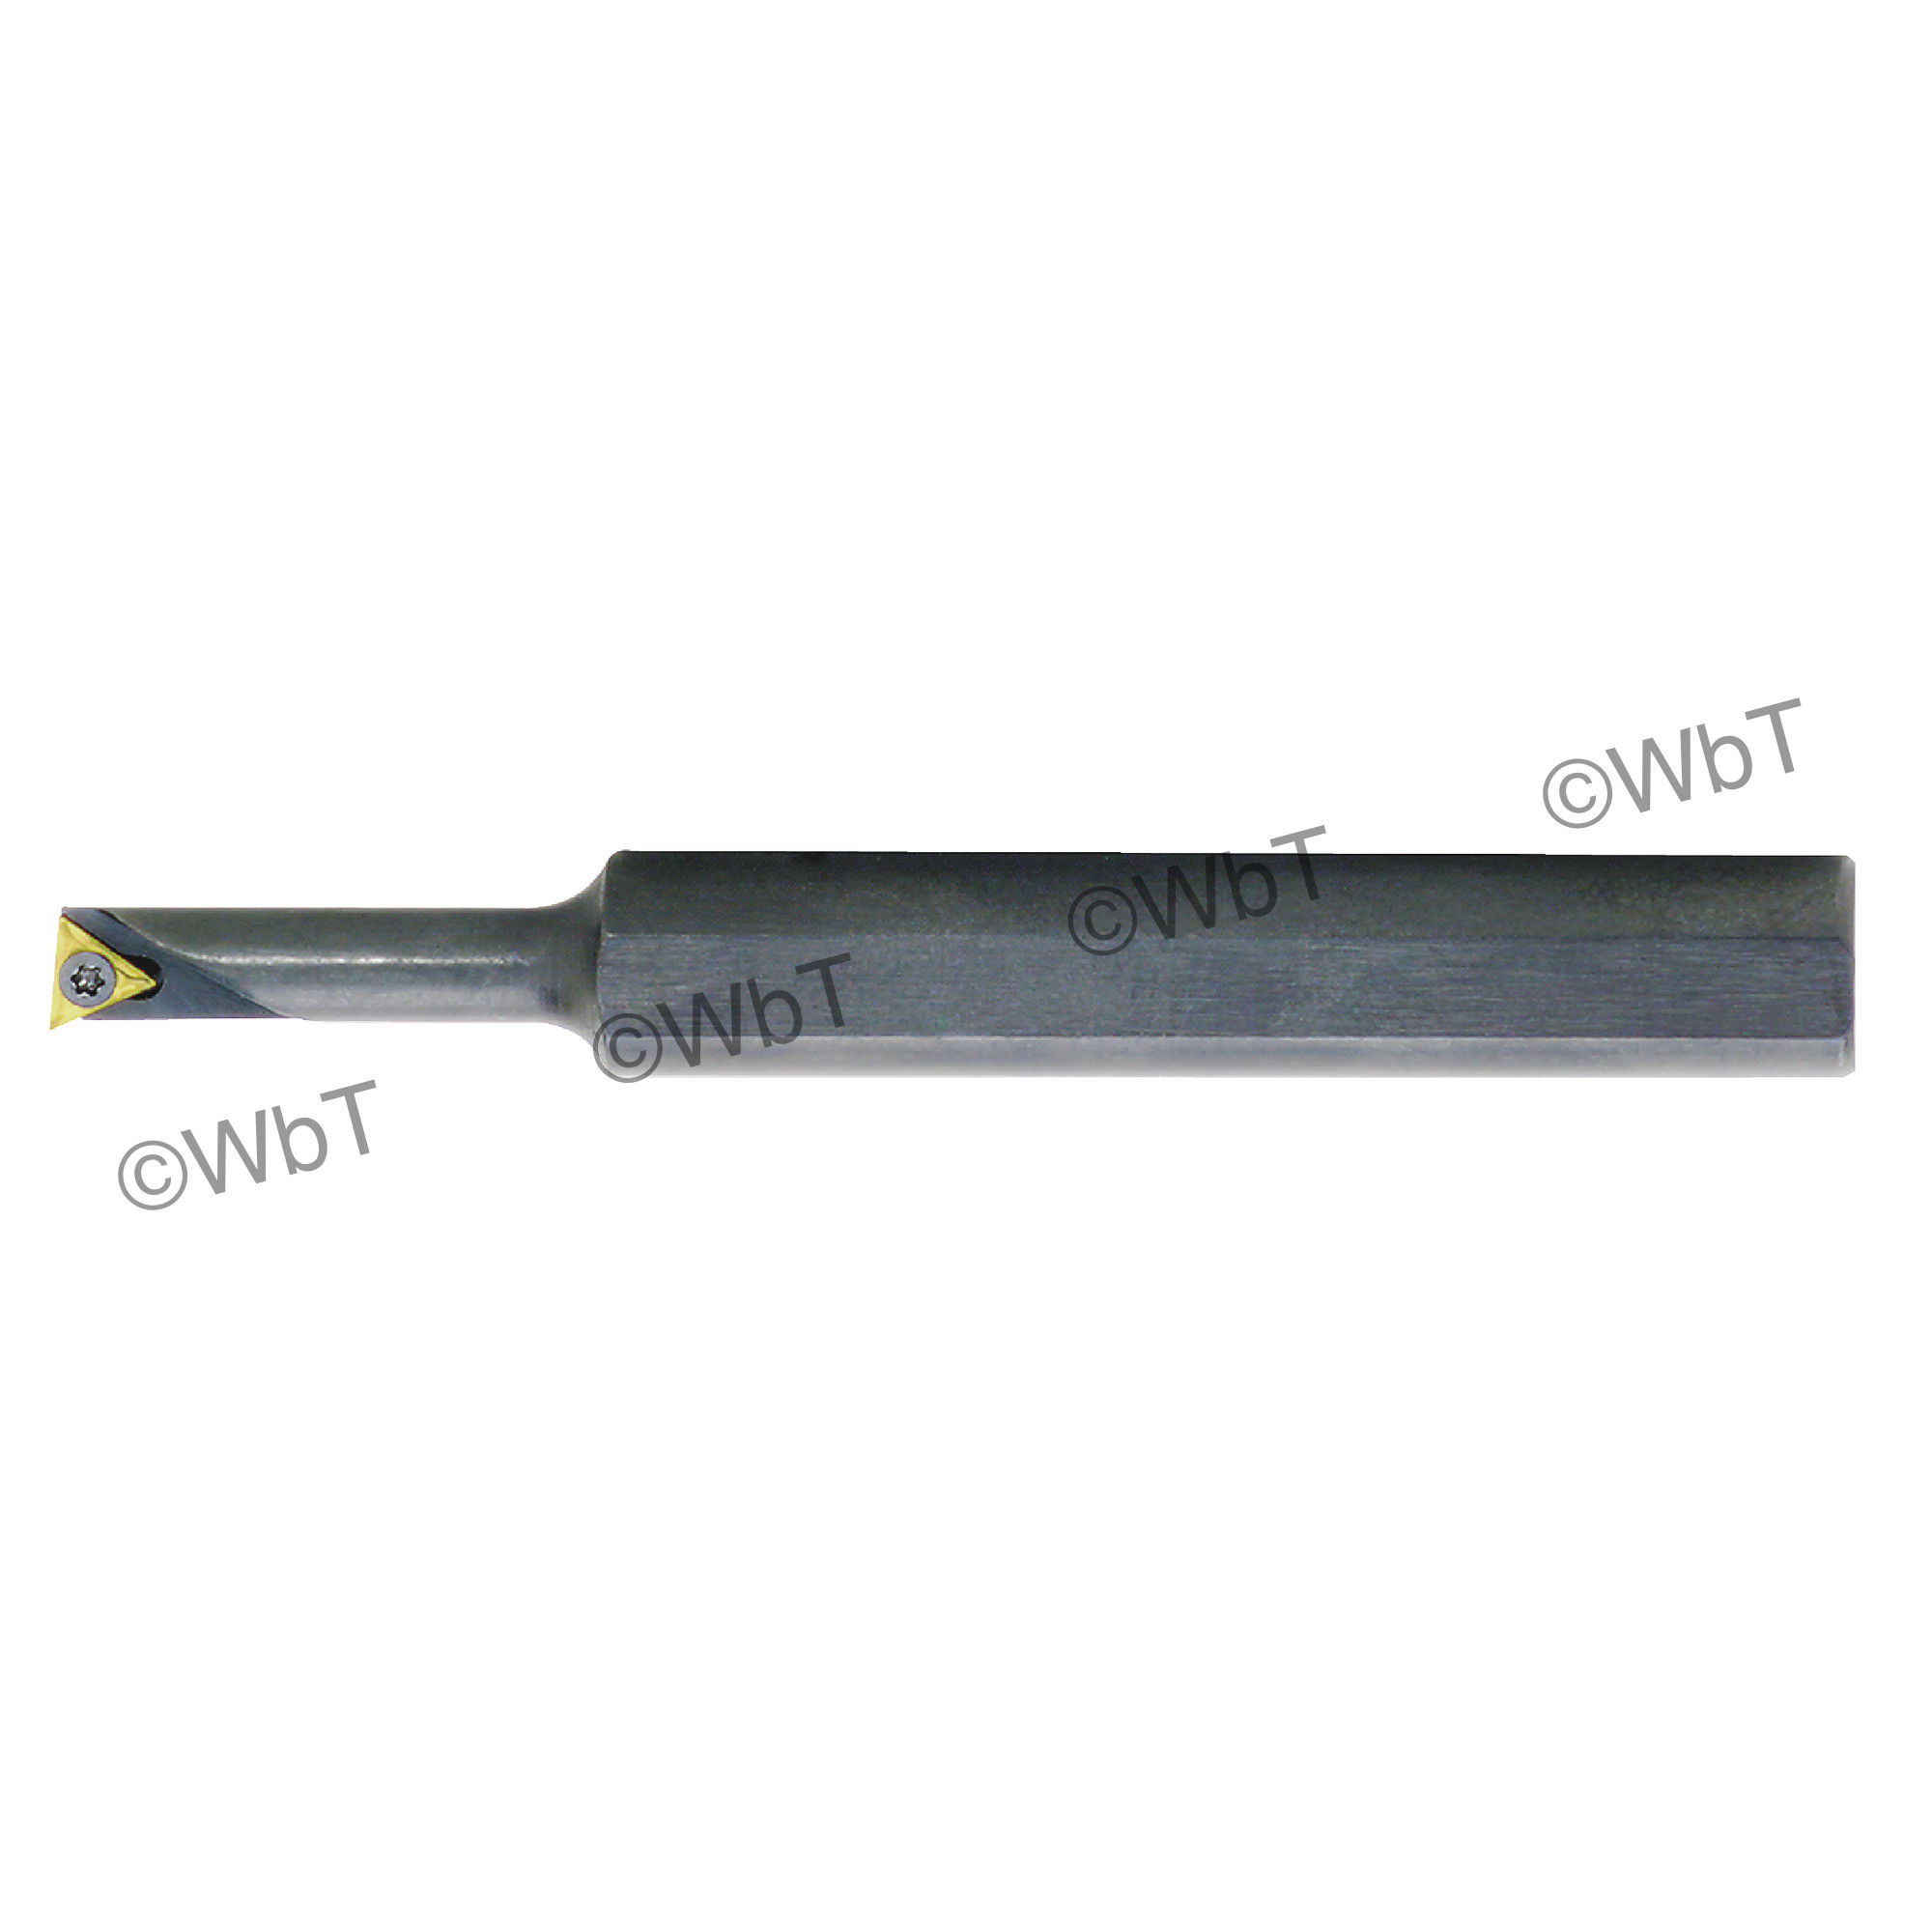 TTC PRODUCTION - NBN6-5-2 / Steel Boring Bar / 0.500@QUOT: Shank / TCMT1.210.5 / Right Hand